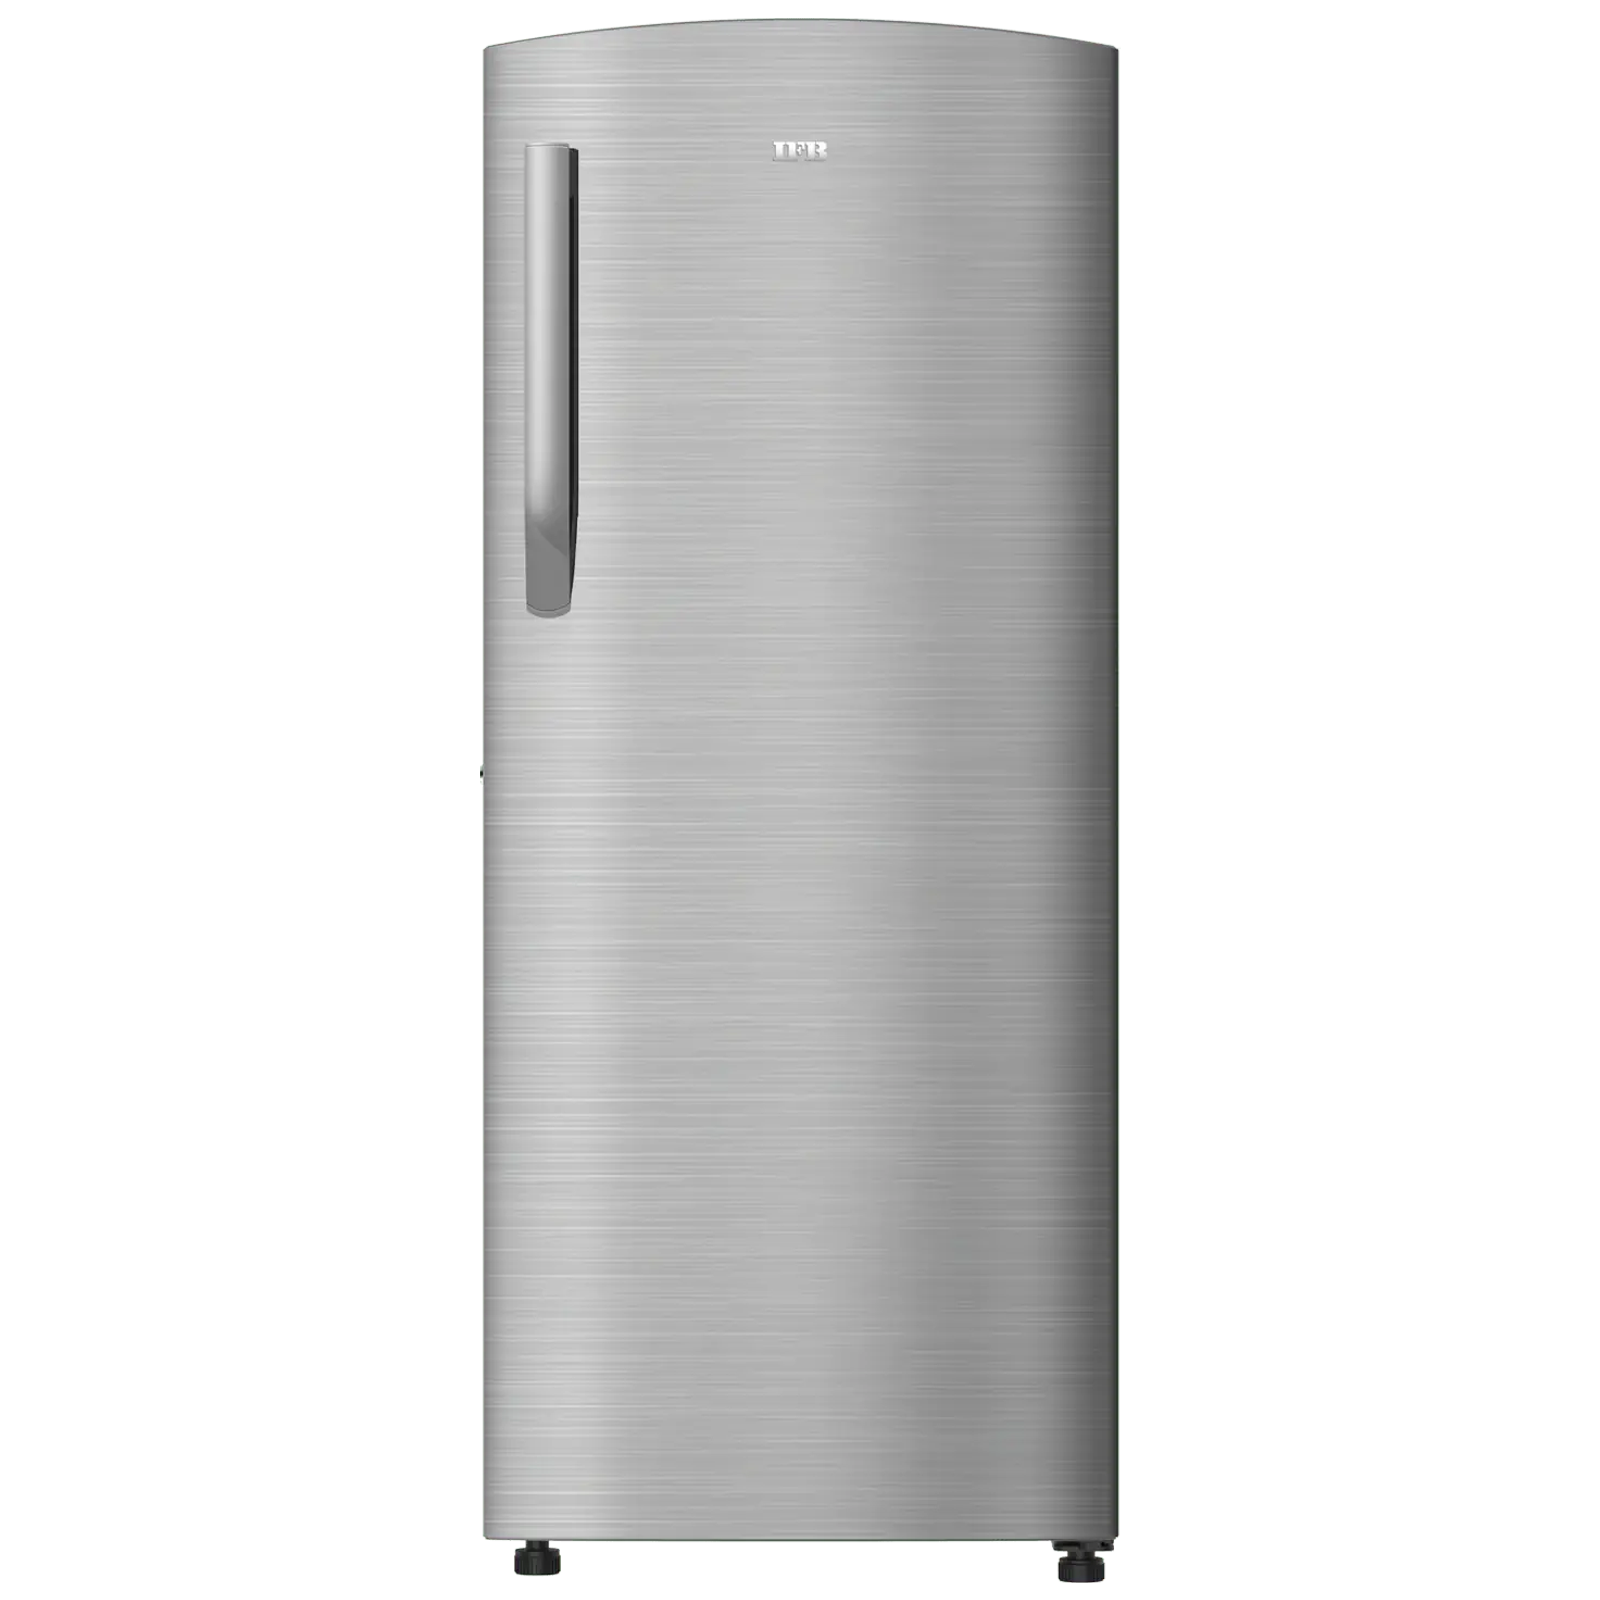 IFB Advance Cool 212 Litres 4 Star Direct Cool Single Door Refrigerator with Antibacterial Gasket (IFBDC2324IGS, Grey Steel)